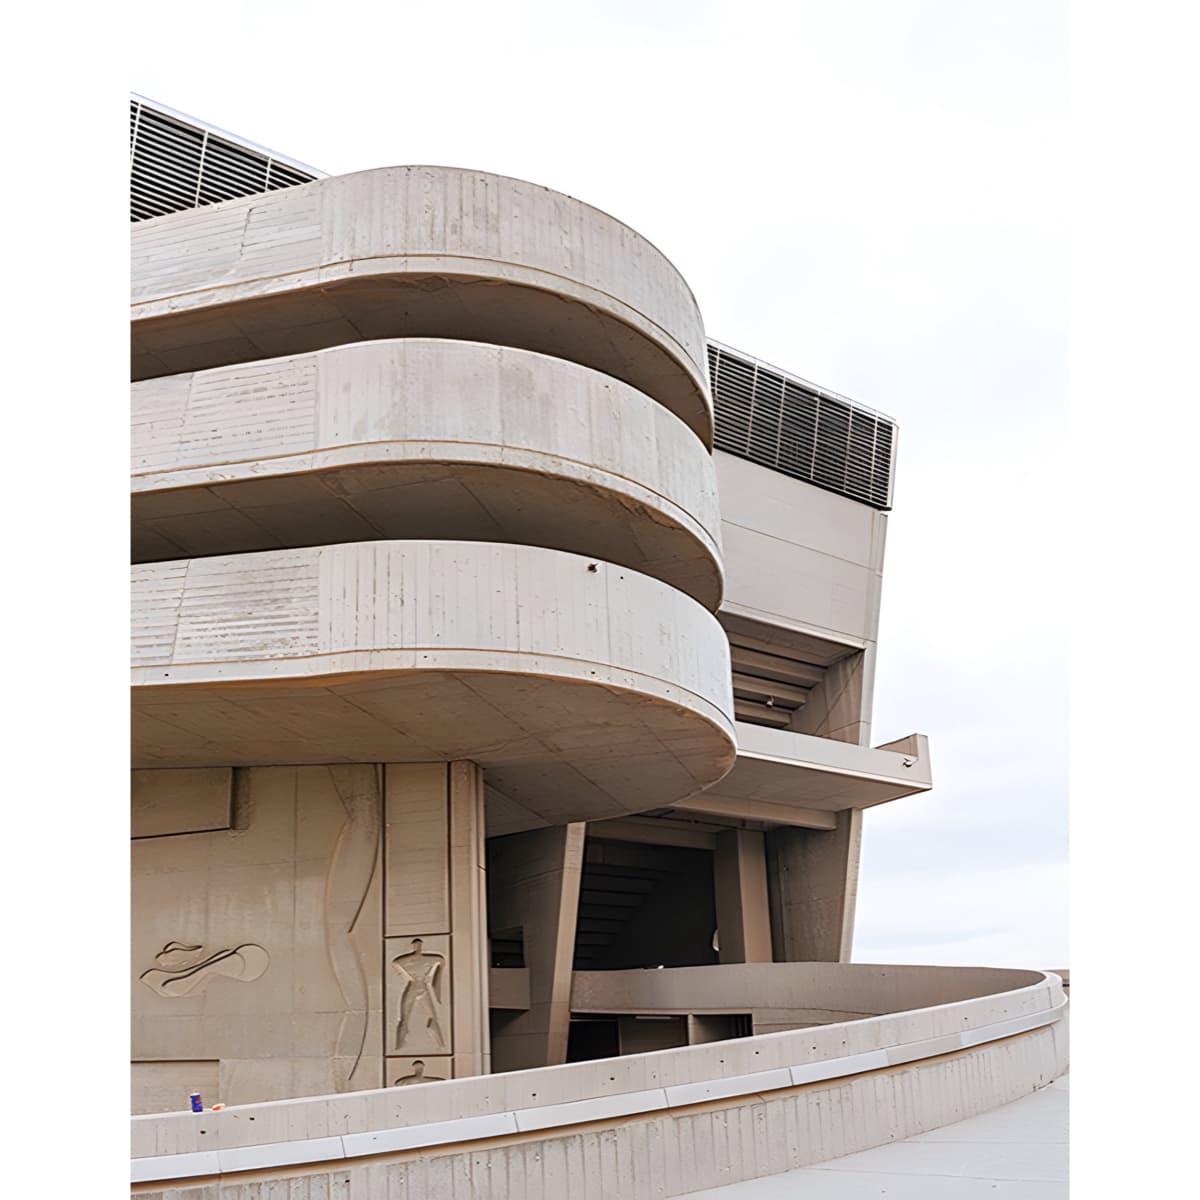 Cabanon is one of 17 UNESCO heritage Le Corbusier buildings